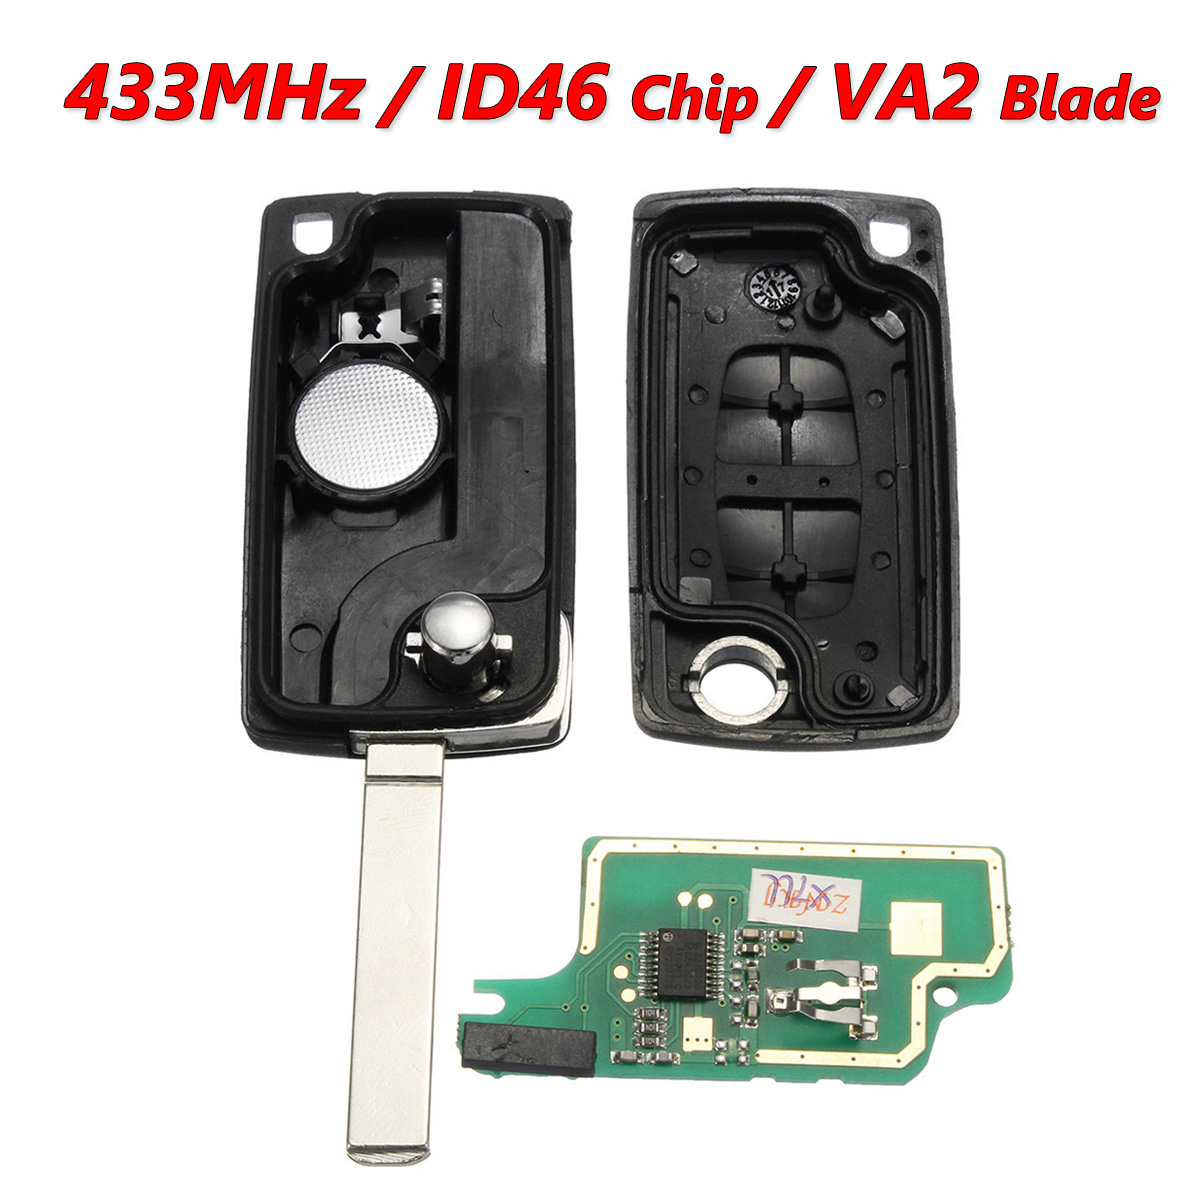 2-Buttons-Key-Case-Fob-433MHz-ID46-Chip-VA2-Blade-for-Citroen-C2-Peuge0t-207-407-1223488